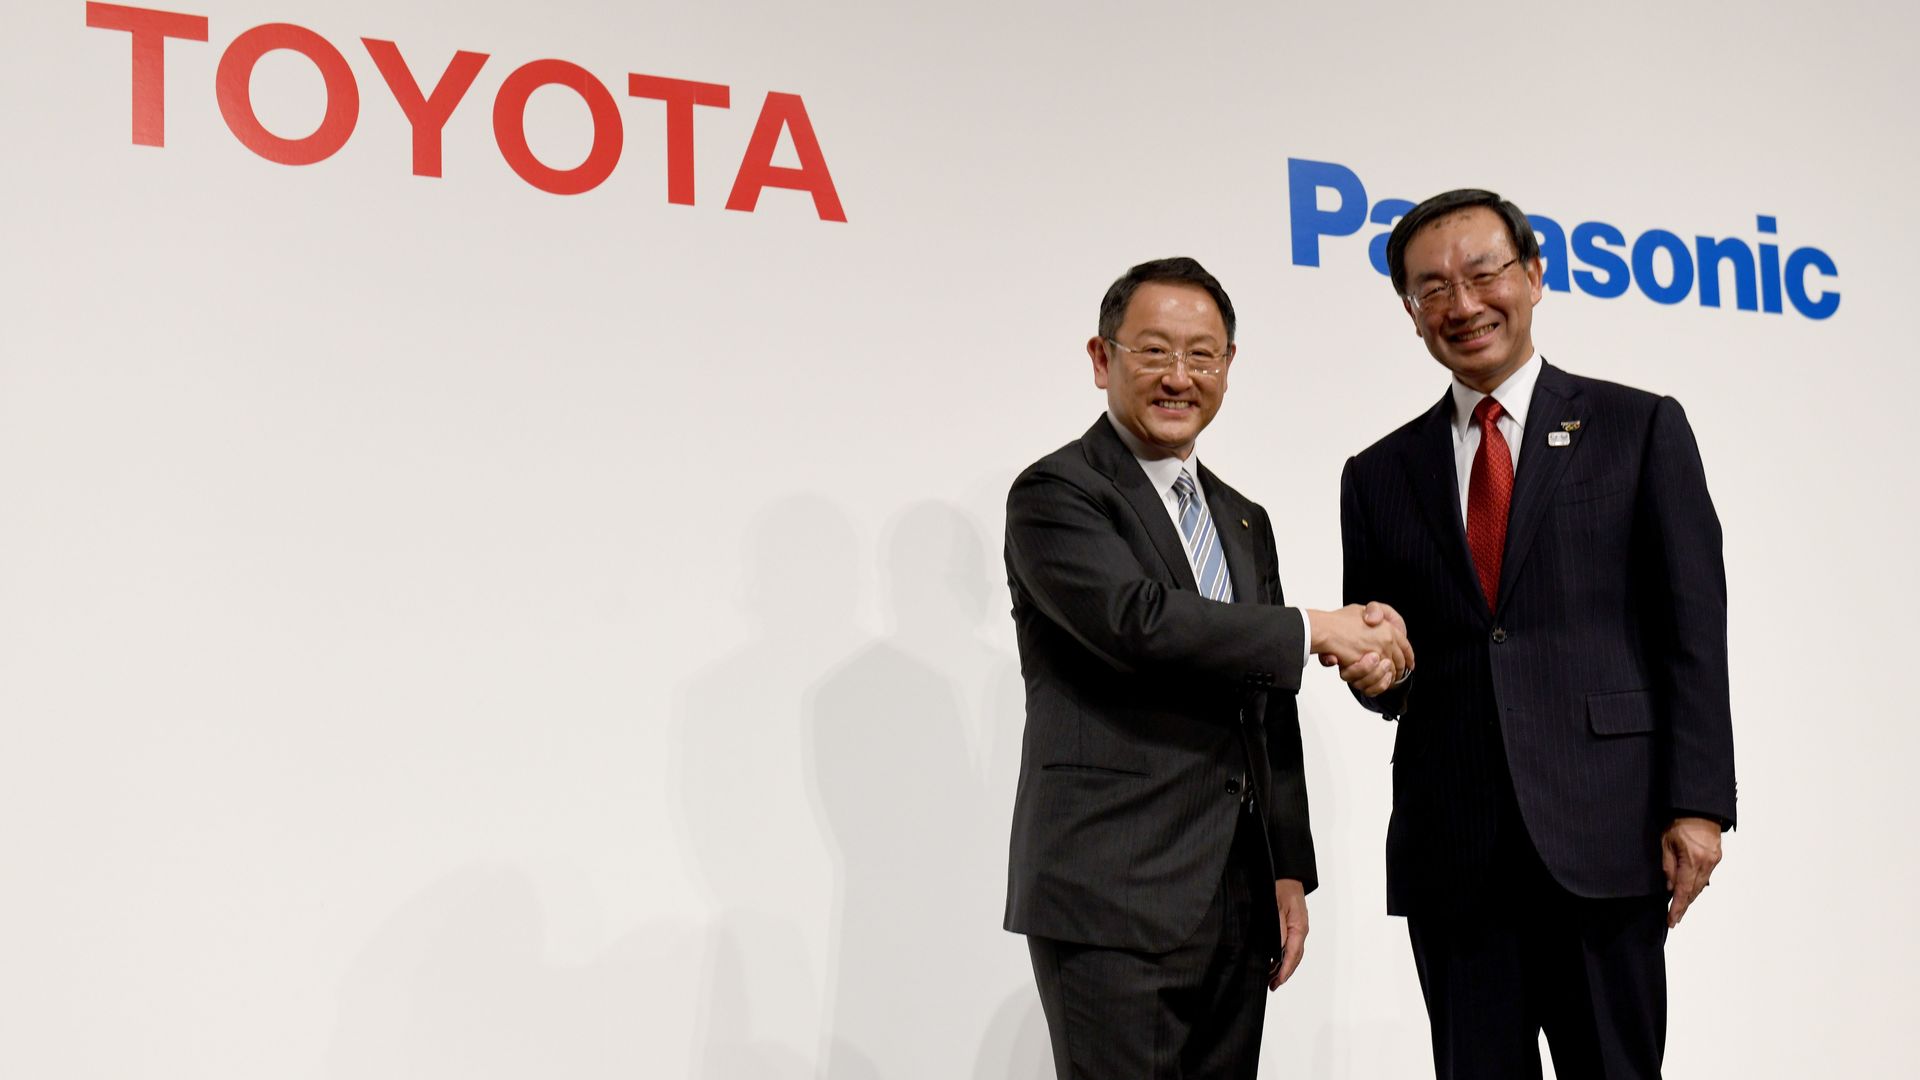 Toyota and Panasonic presidents